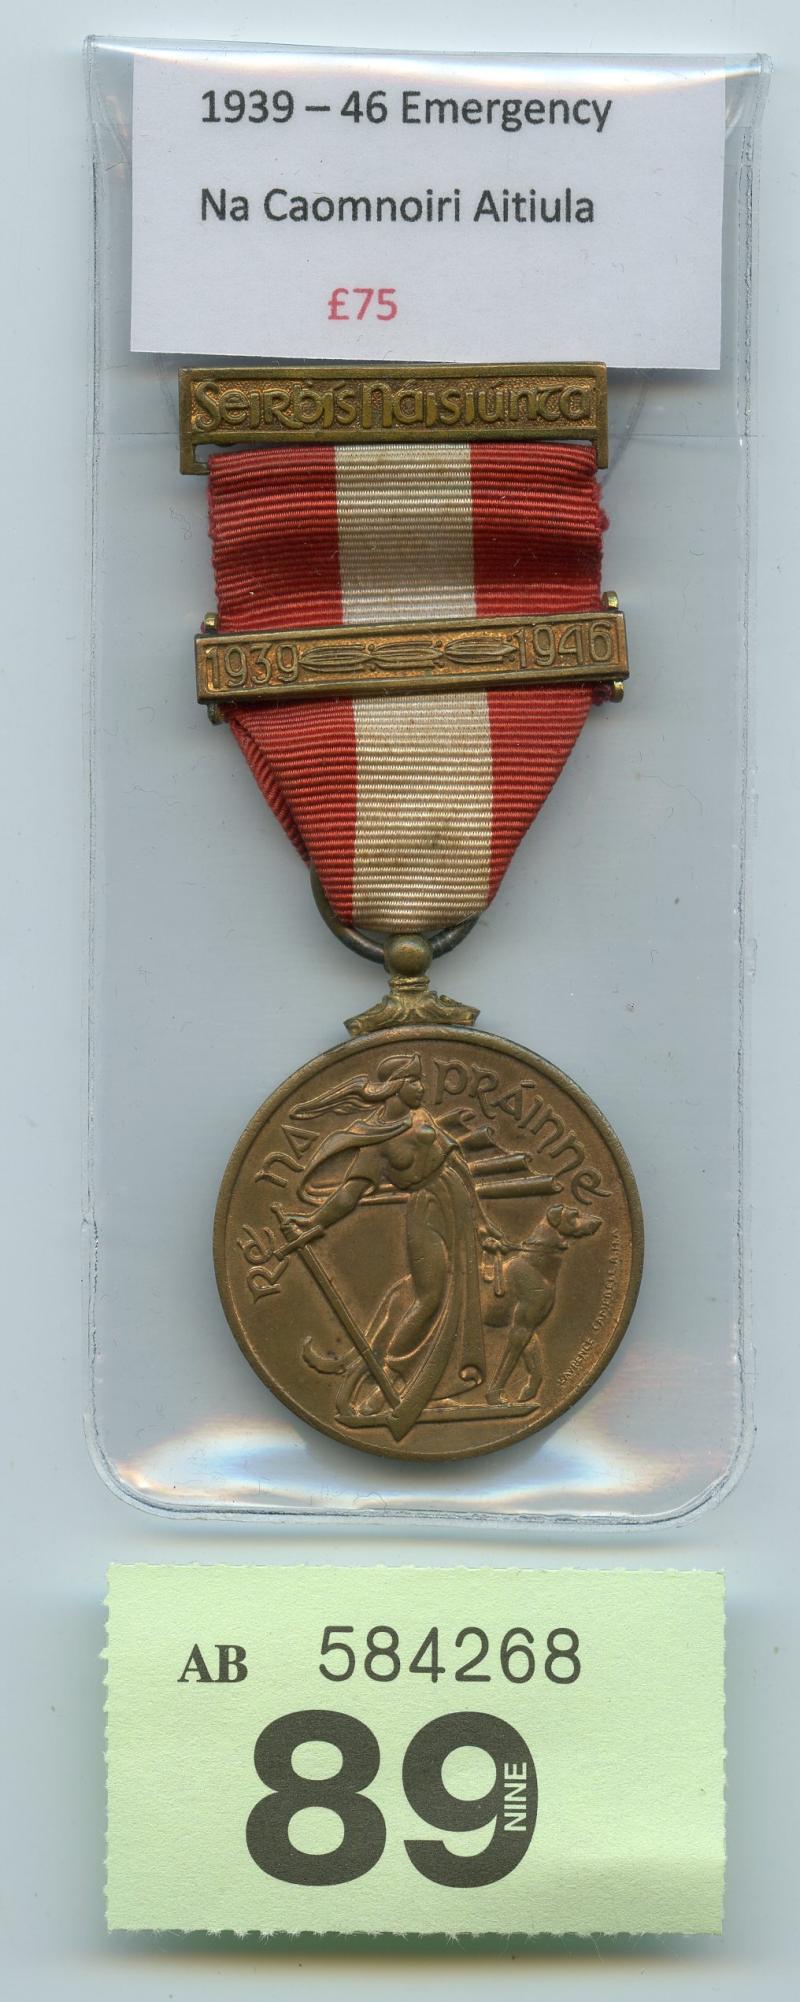 Irish Emergency Medal